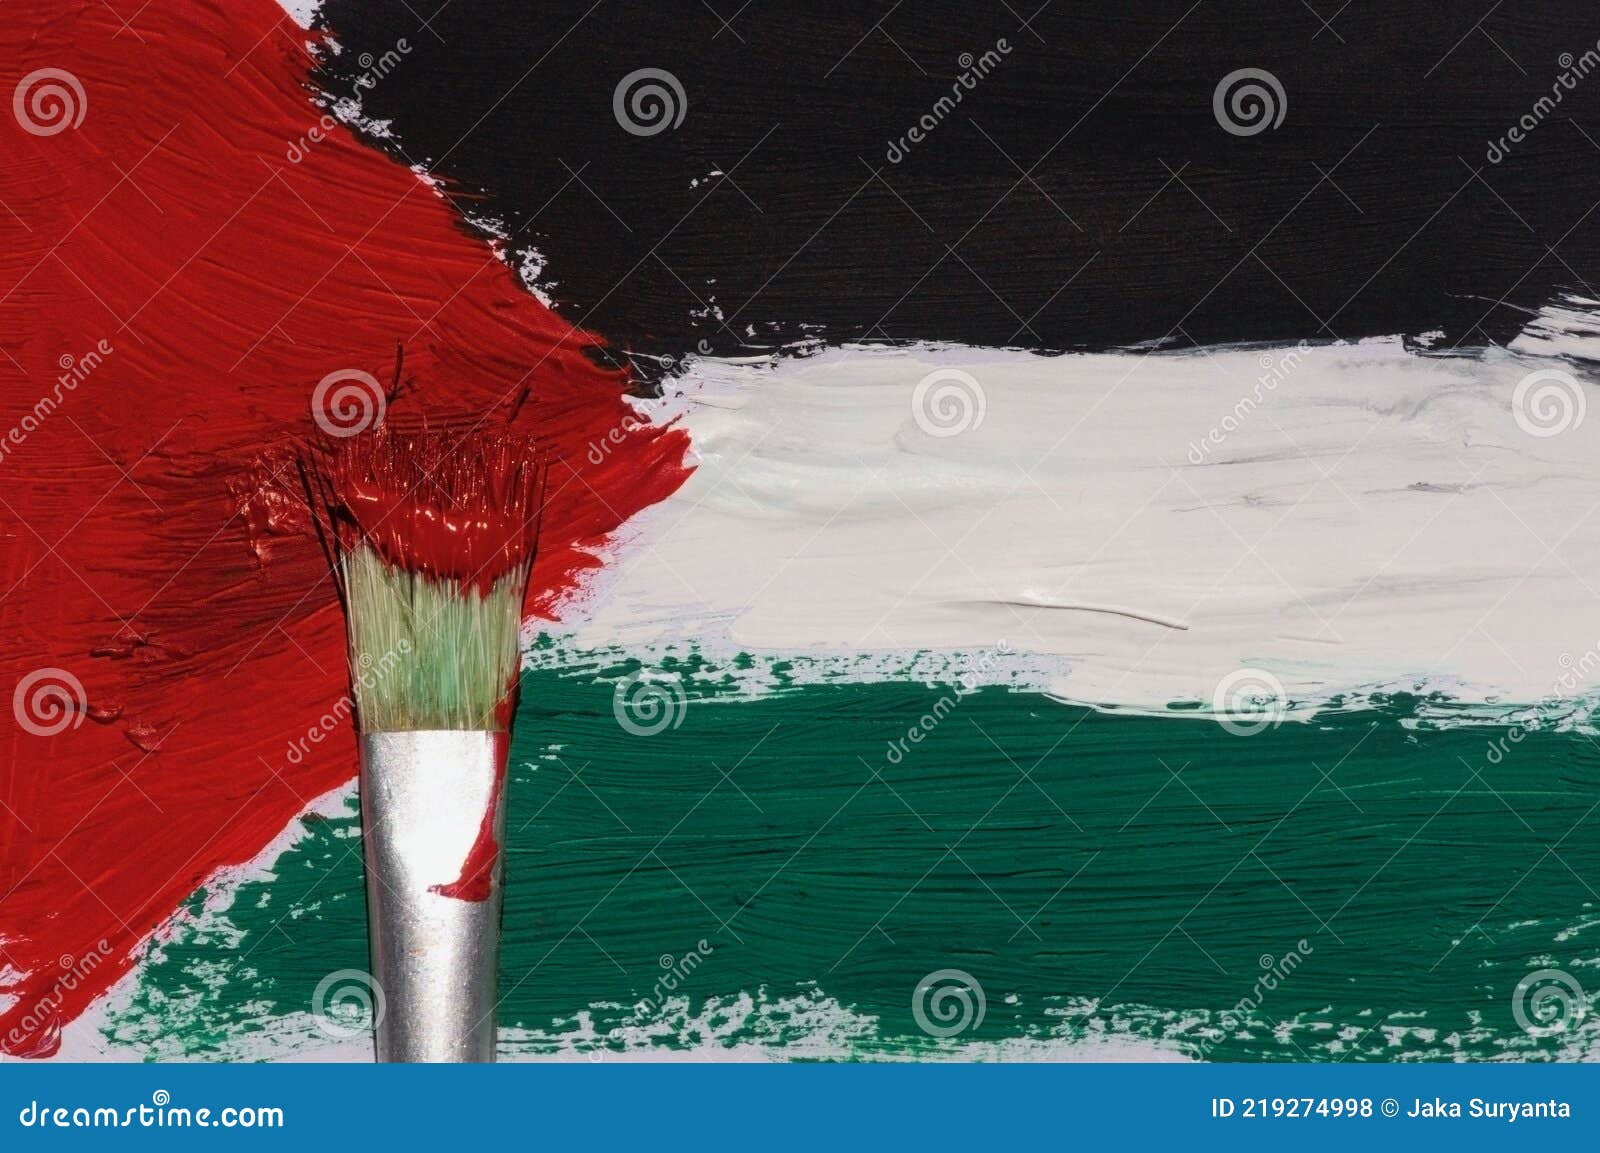 Free Palestine Wallpapers  Top 25 Best Free Palestine Wallpapers Download